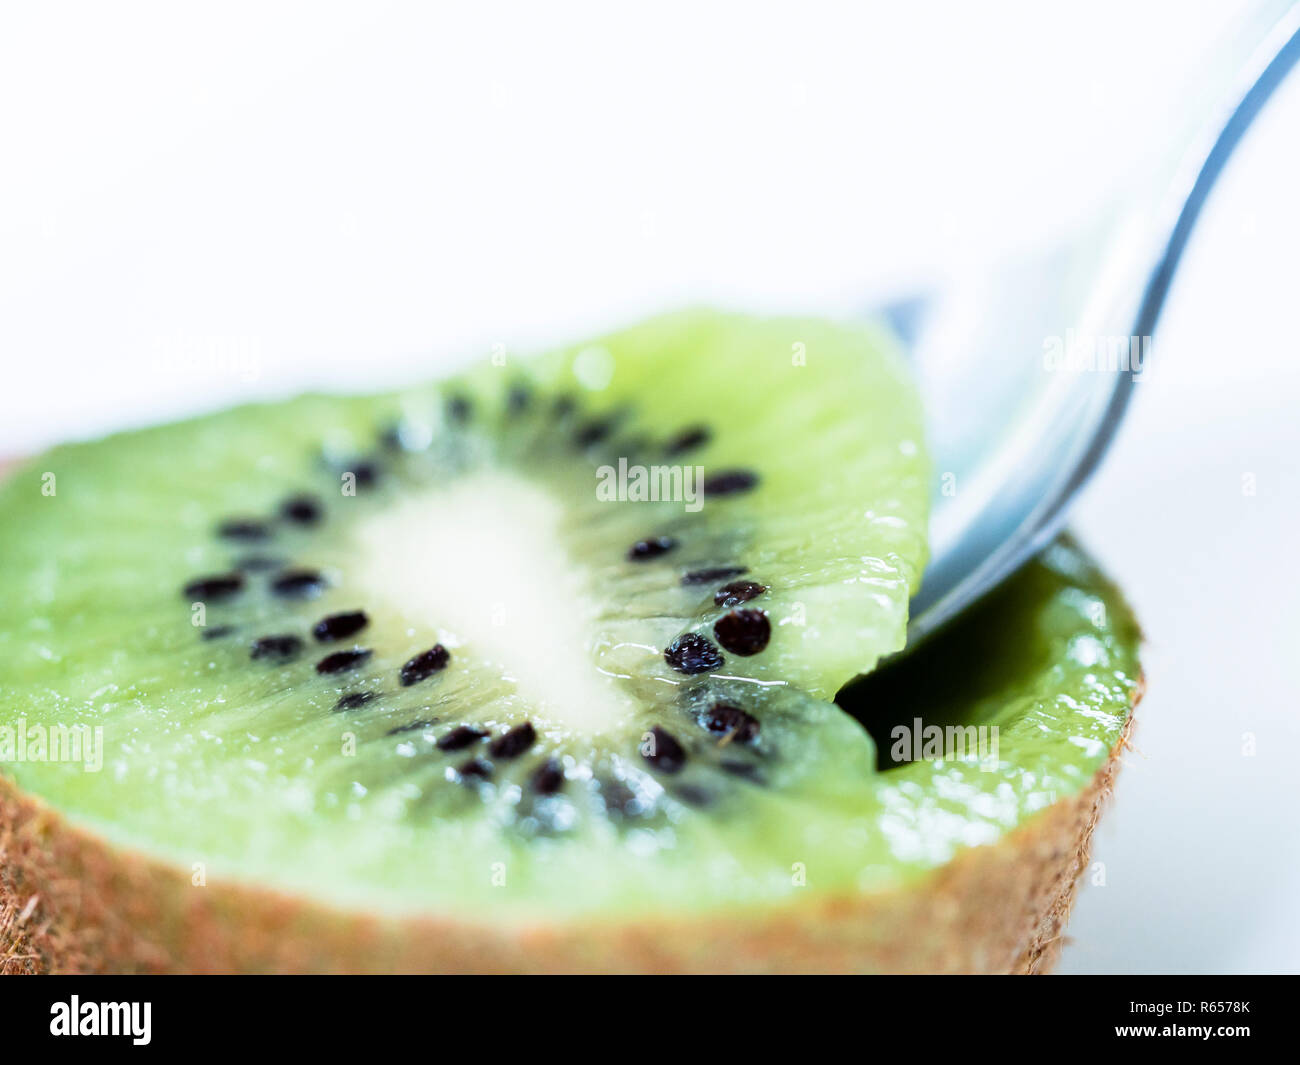 Spooning centre of sliced kiwi fruit Stock Photo